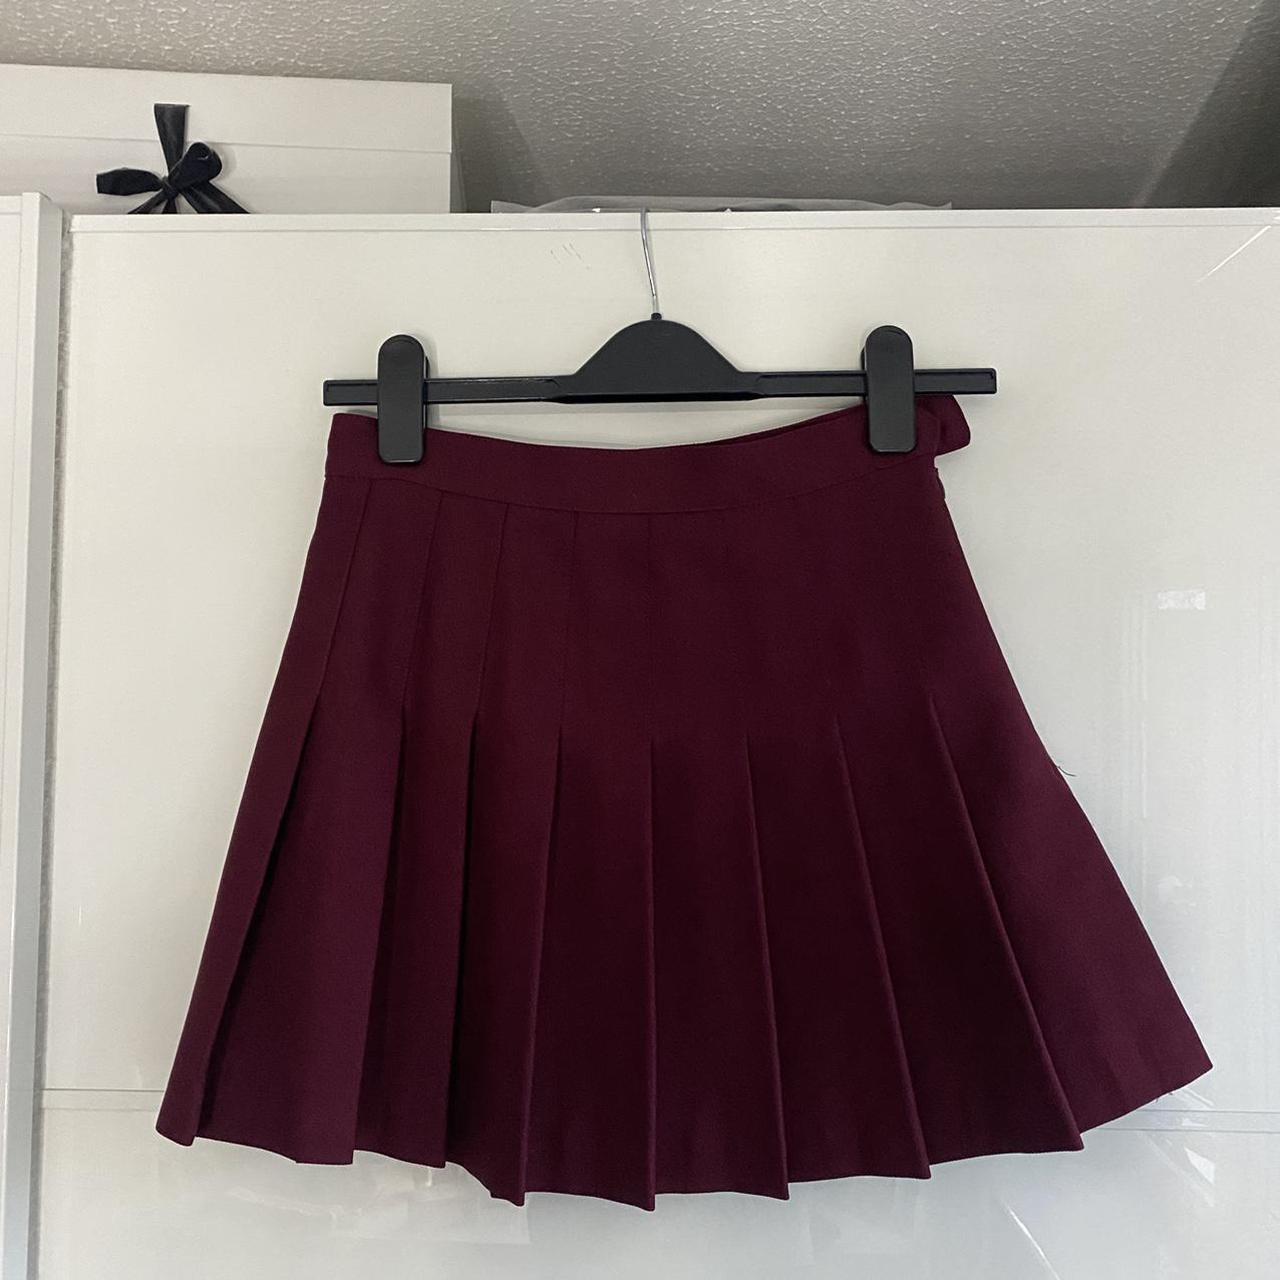 American Apparel Burgundy Tennis Skirt Size Small... - Depop